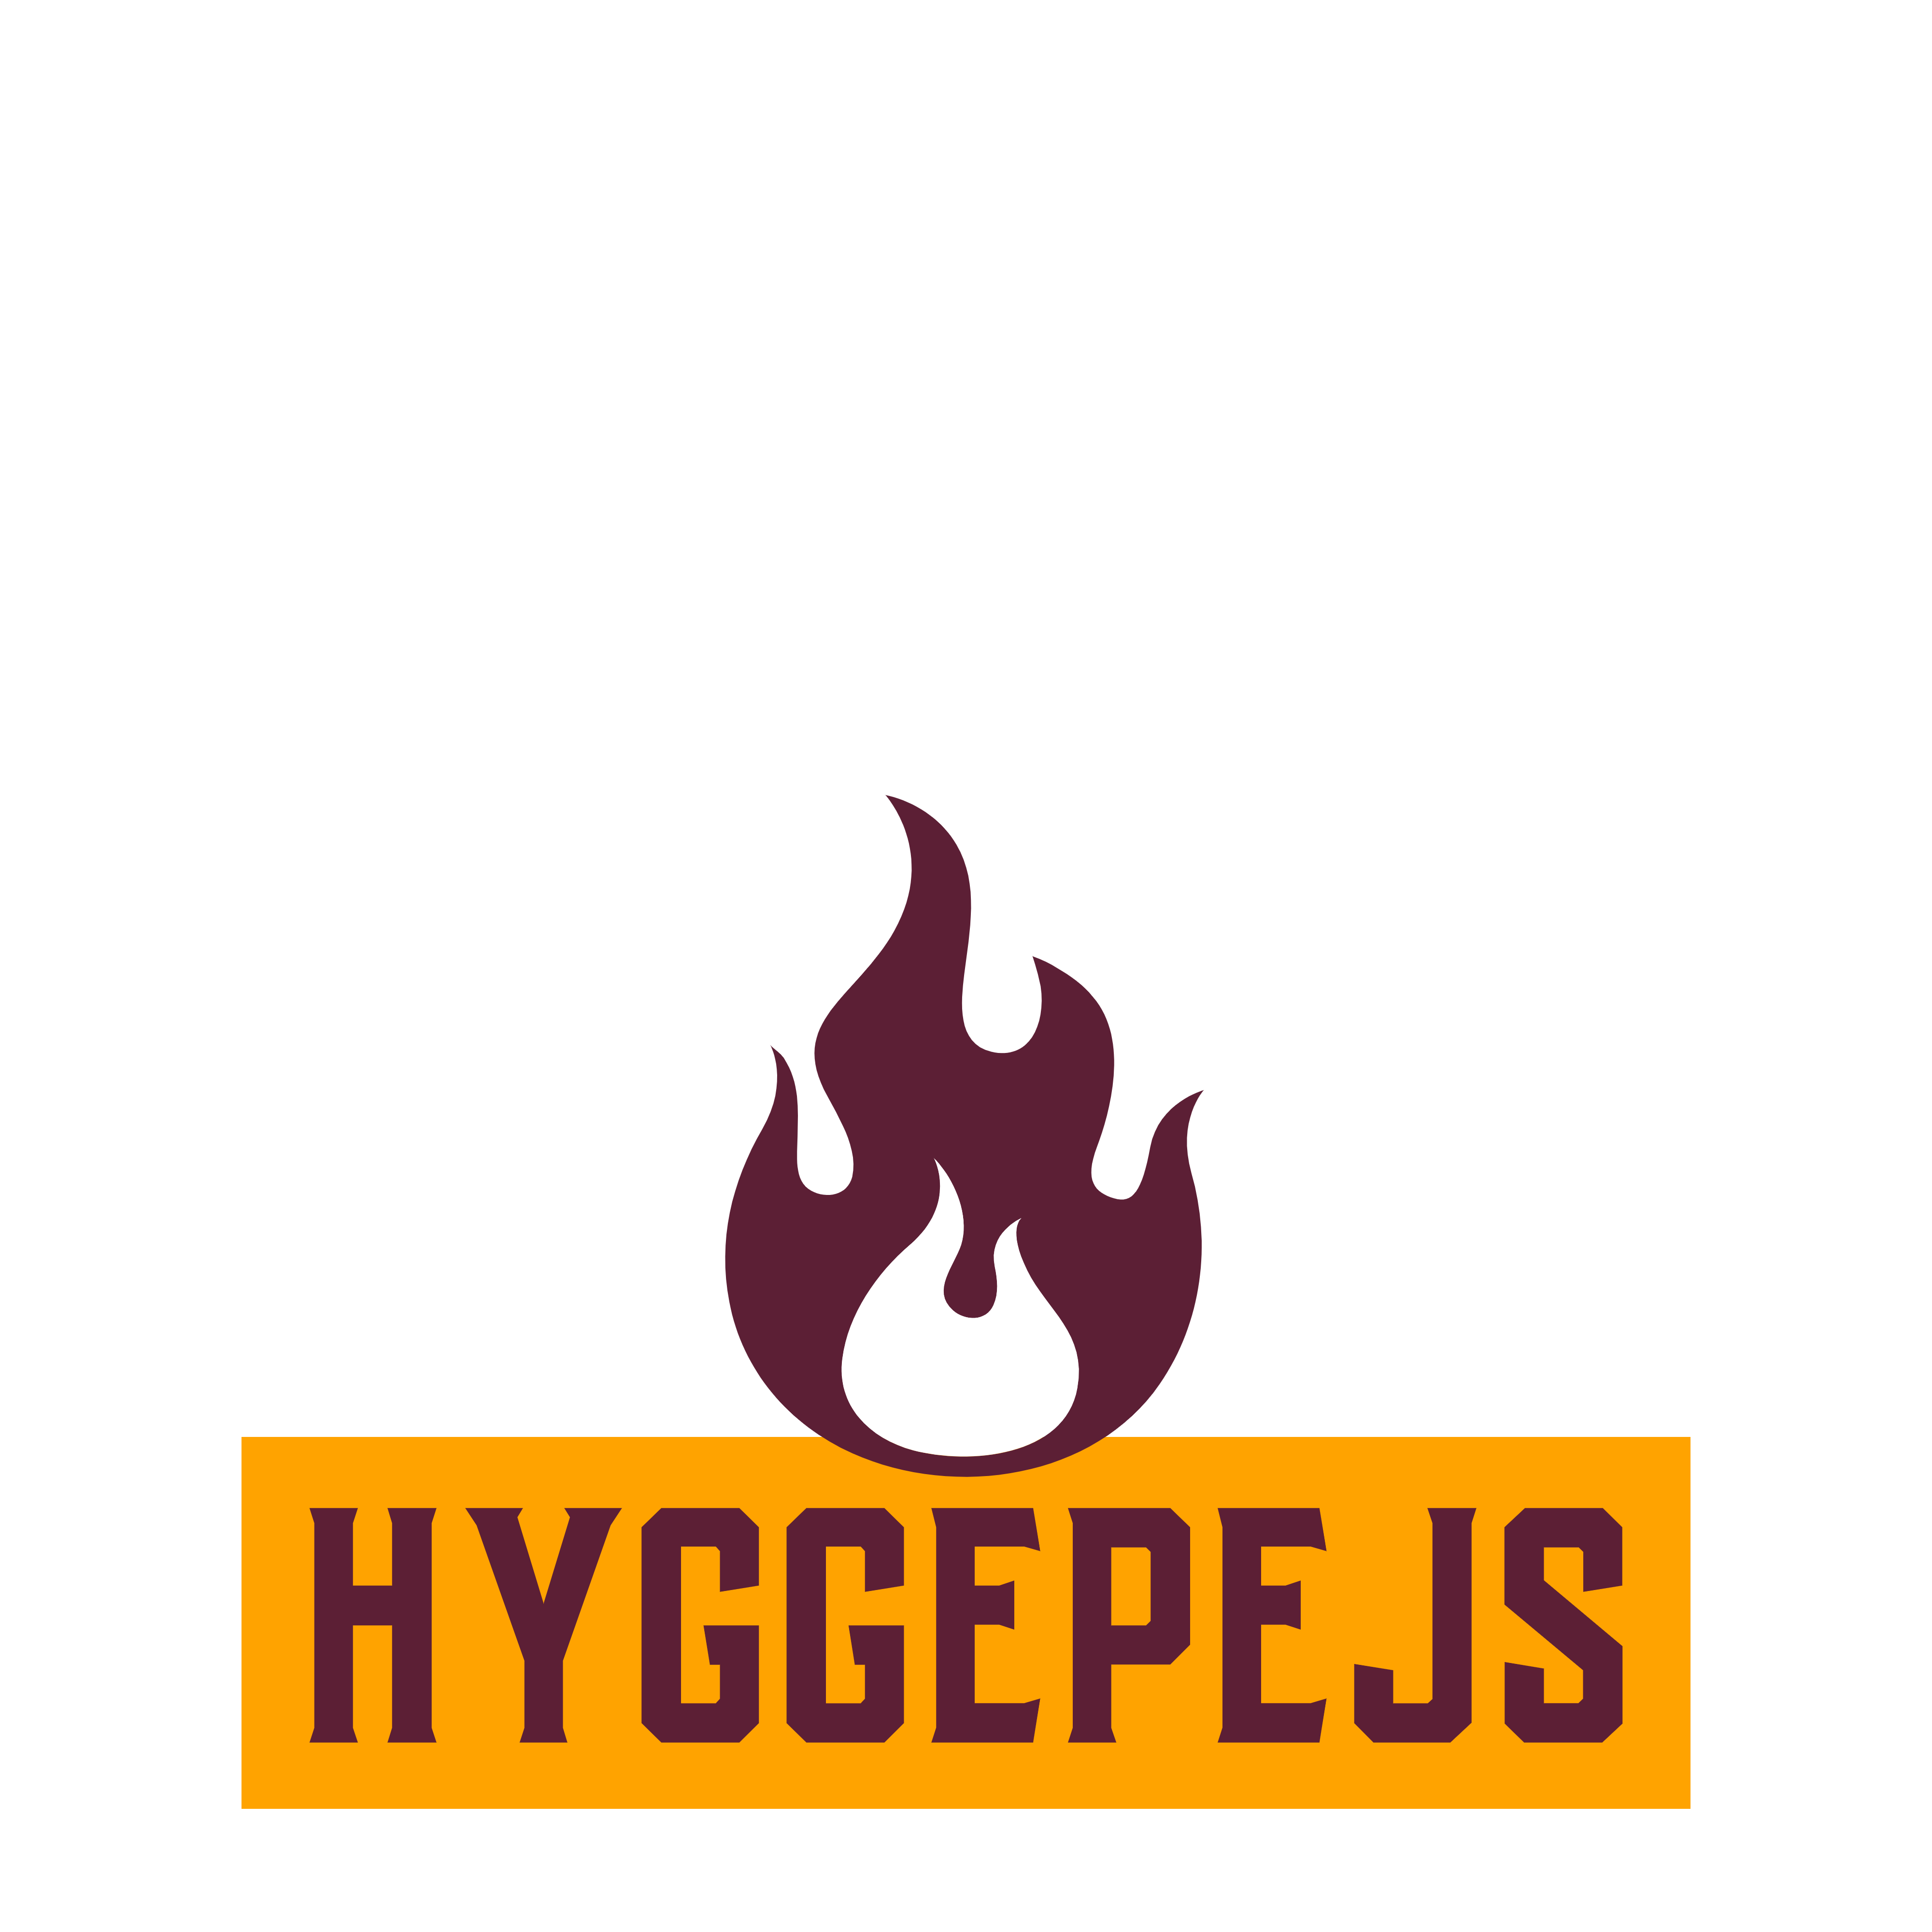 Hyggepejs.dk